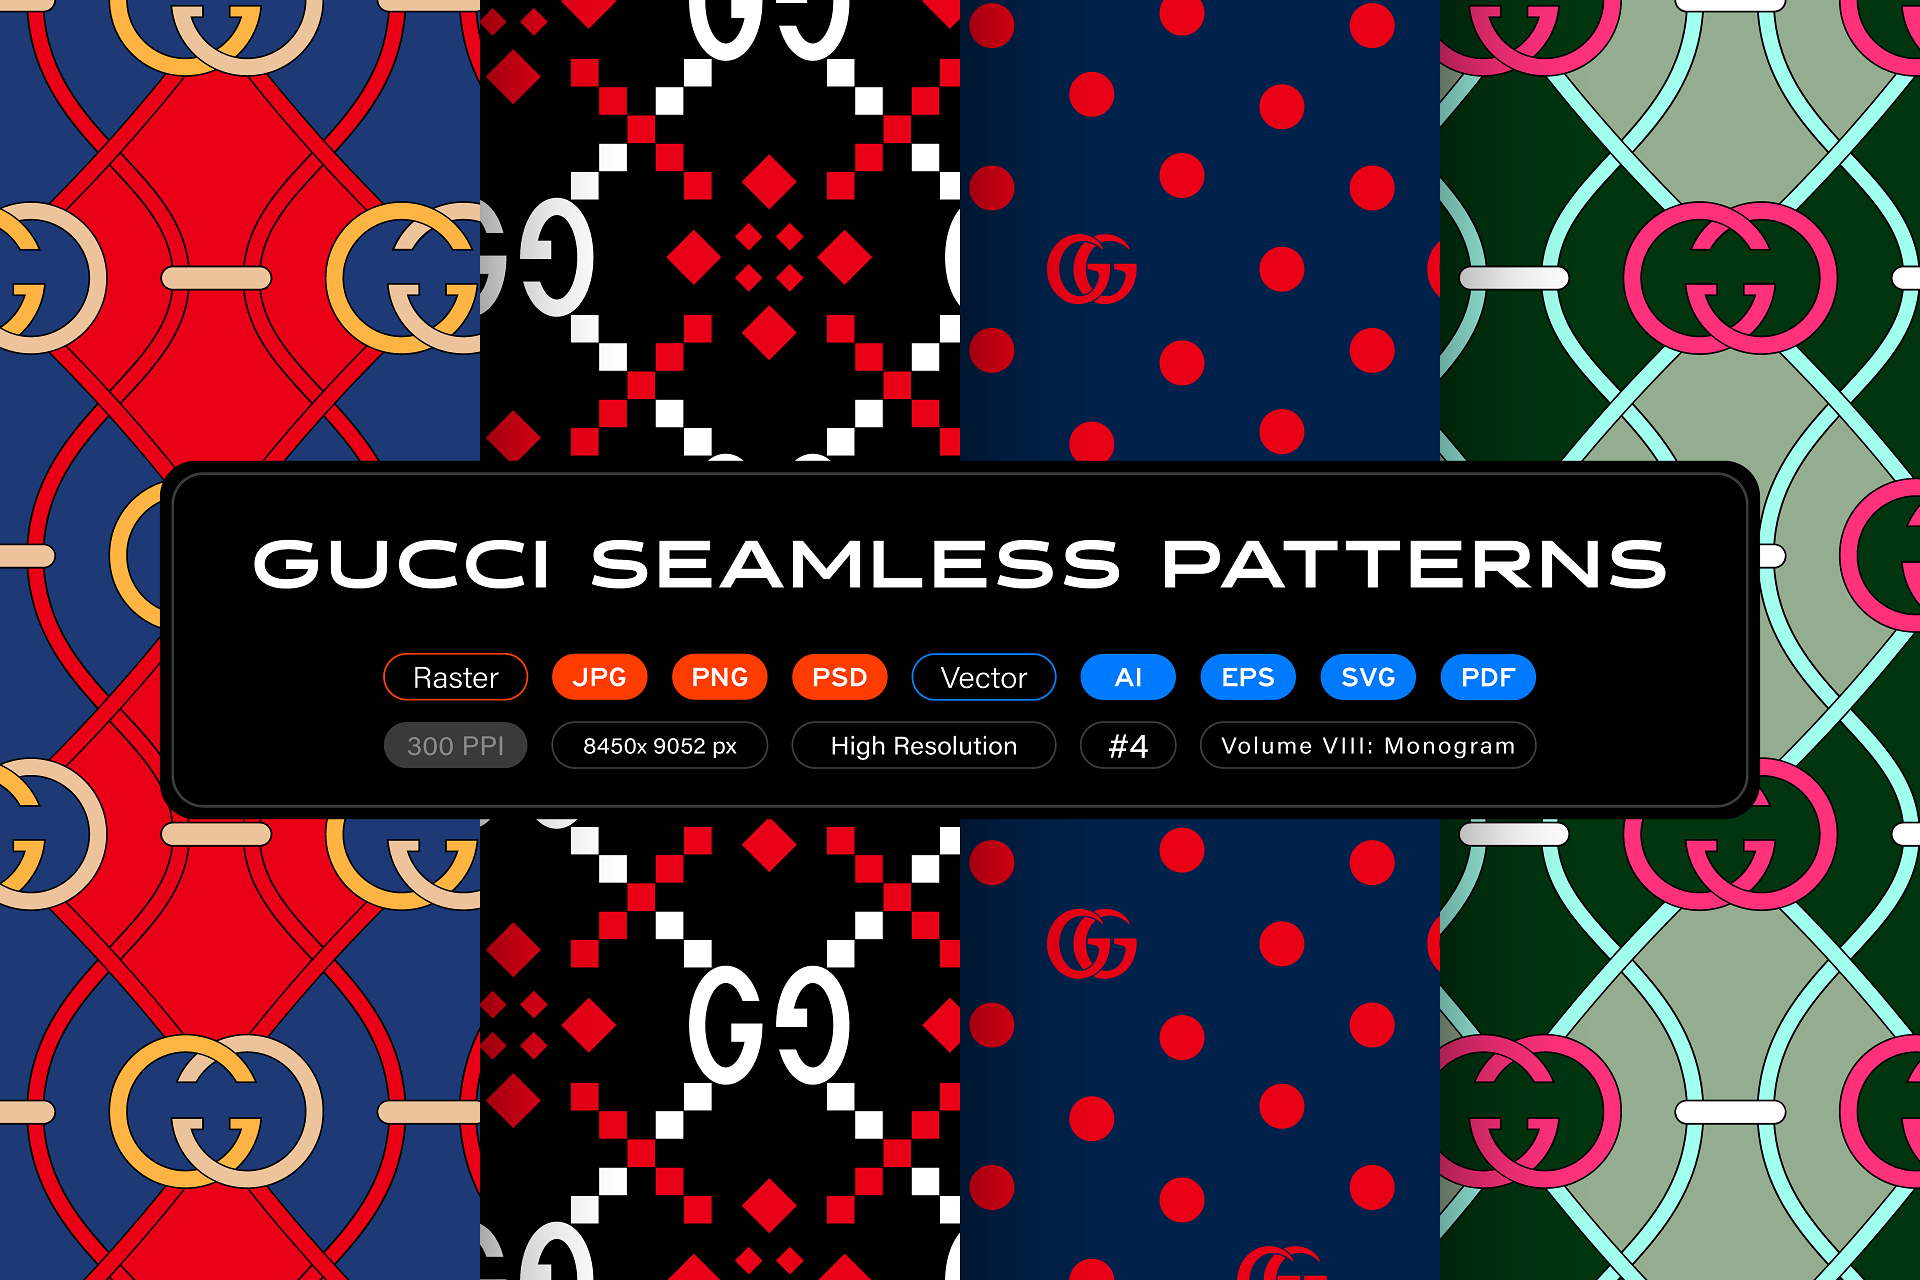 Louis Vuitton and Gucci monogram patterns + Color variants